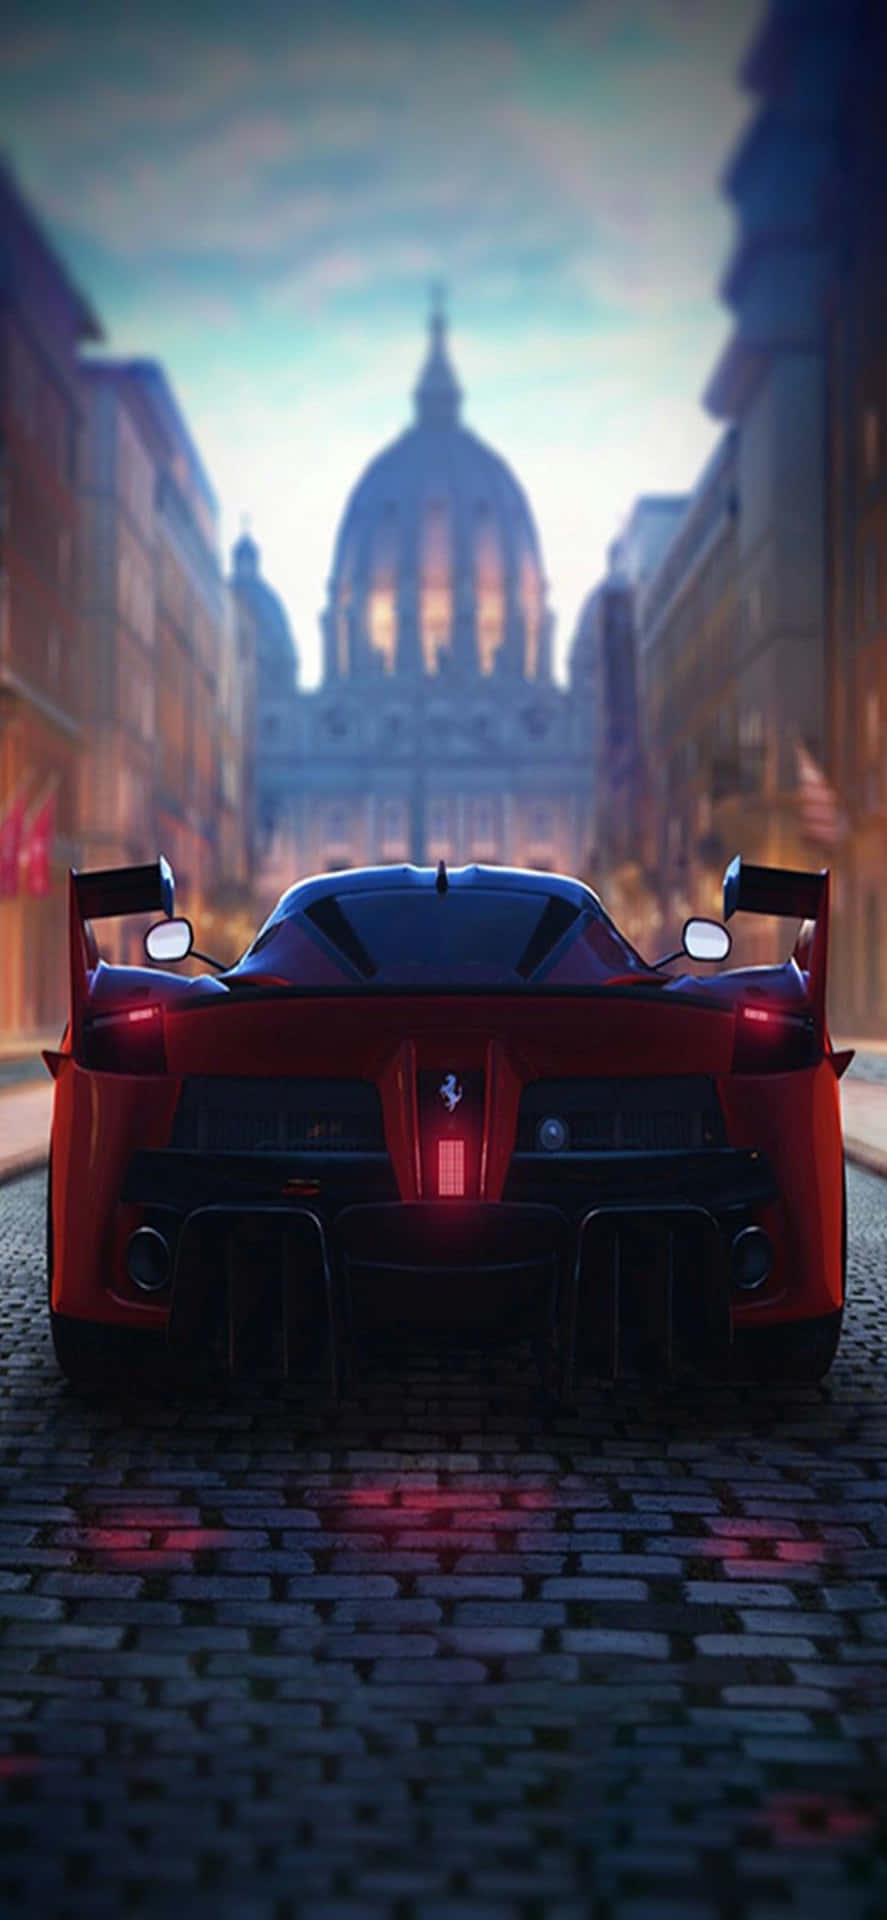 Iphone Xs Max Ferrari baggrund Rød Ferrari på kobbelstensbelægning